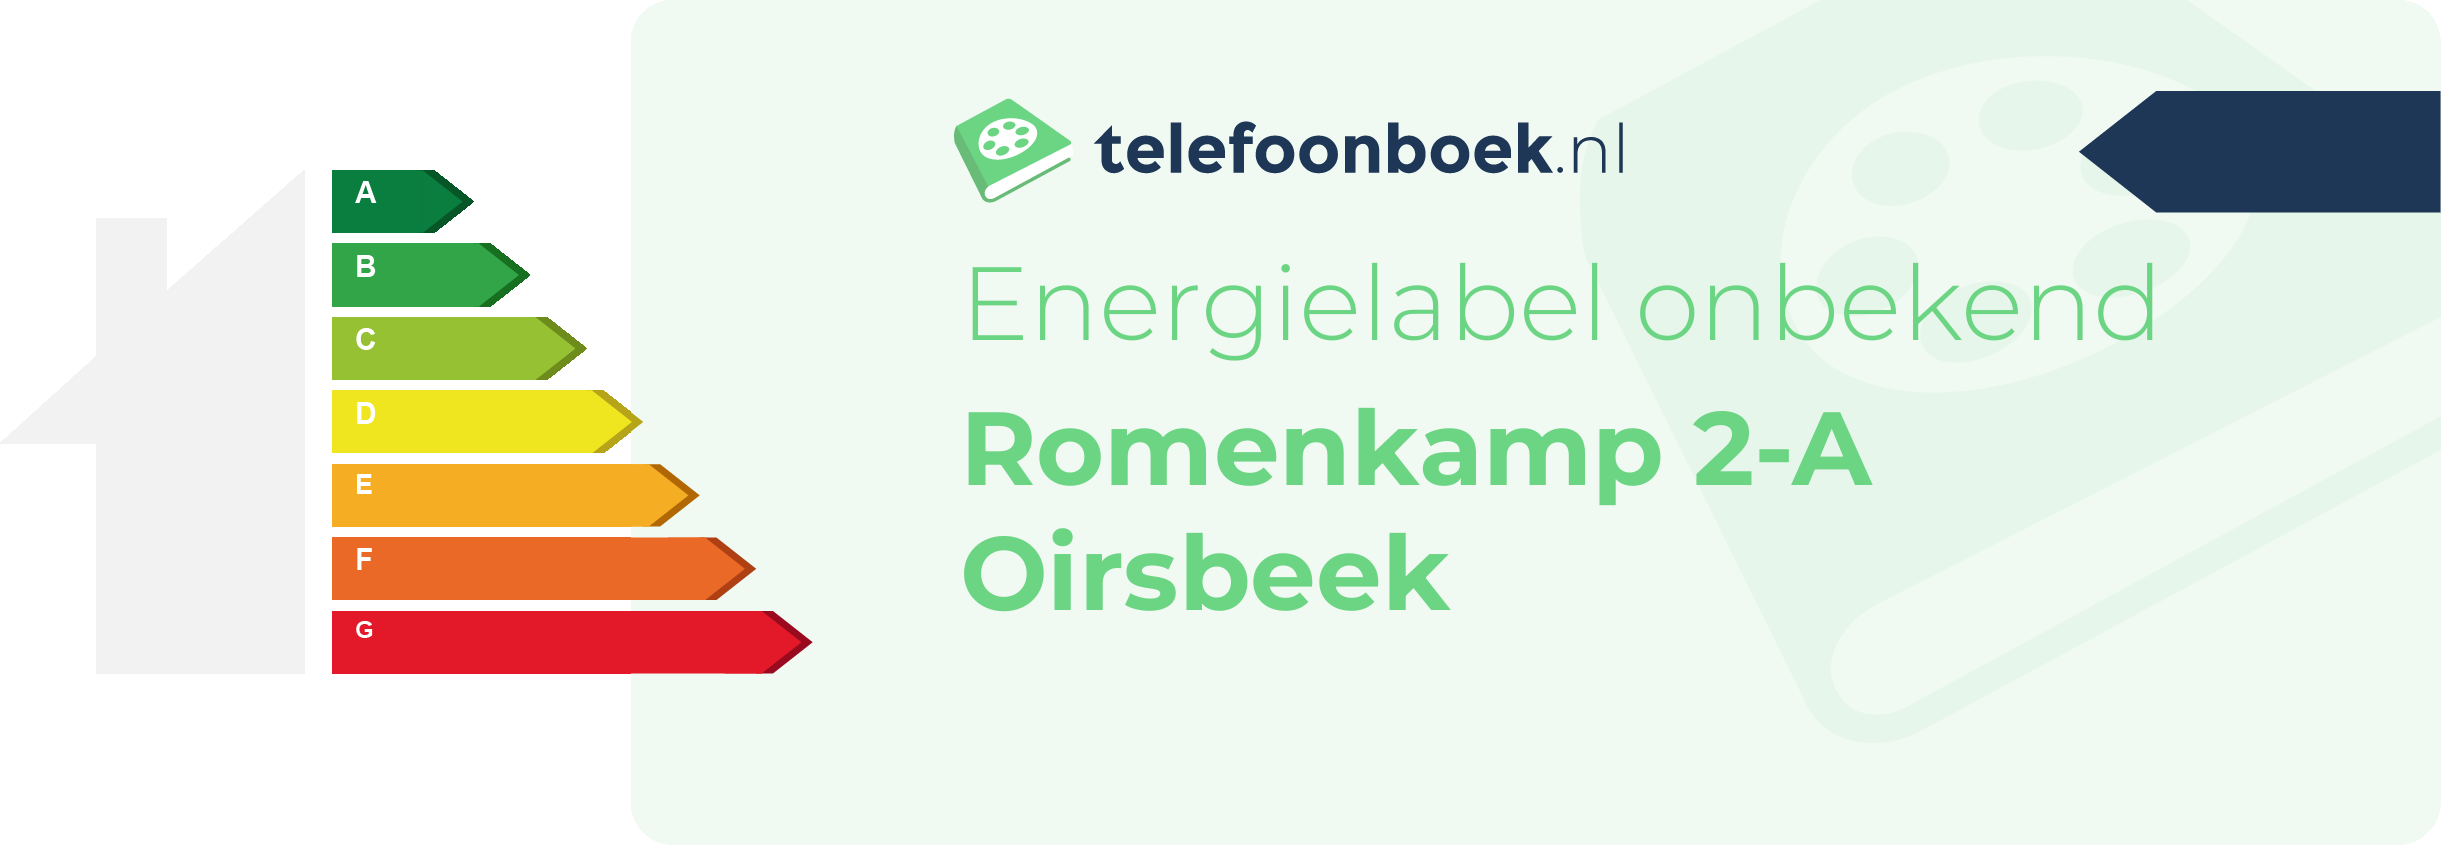 Energielabel Romenkamp 2-A Oirsbeek